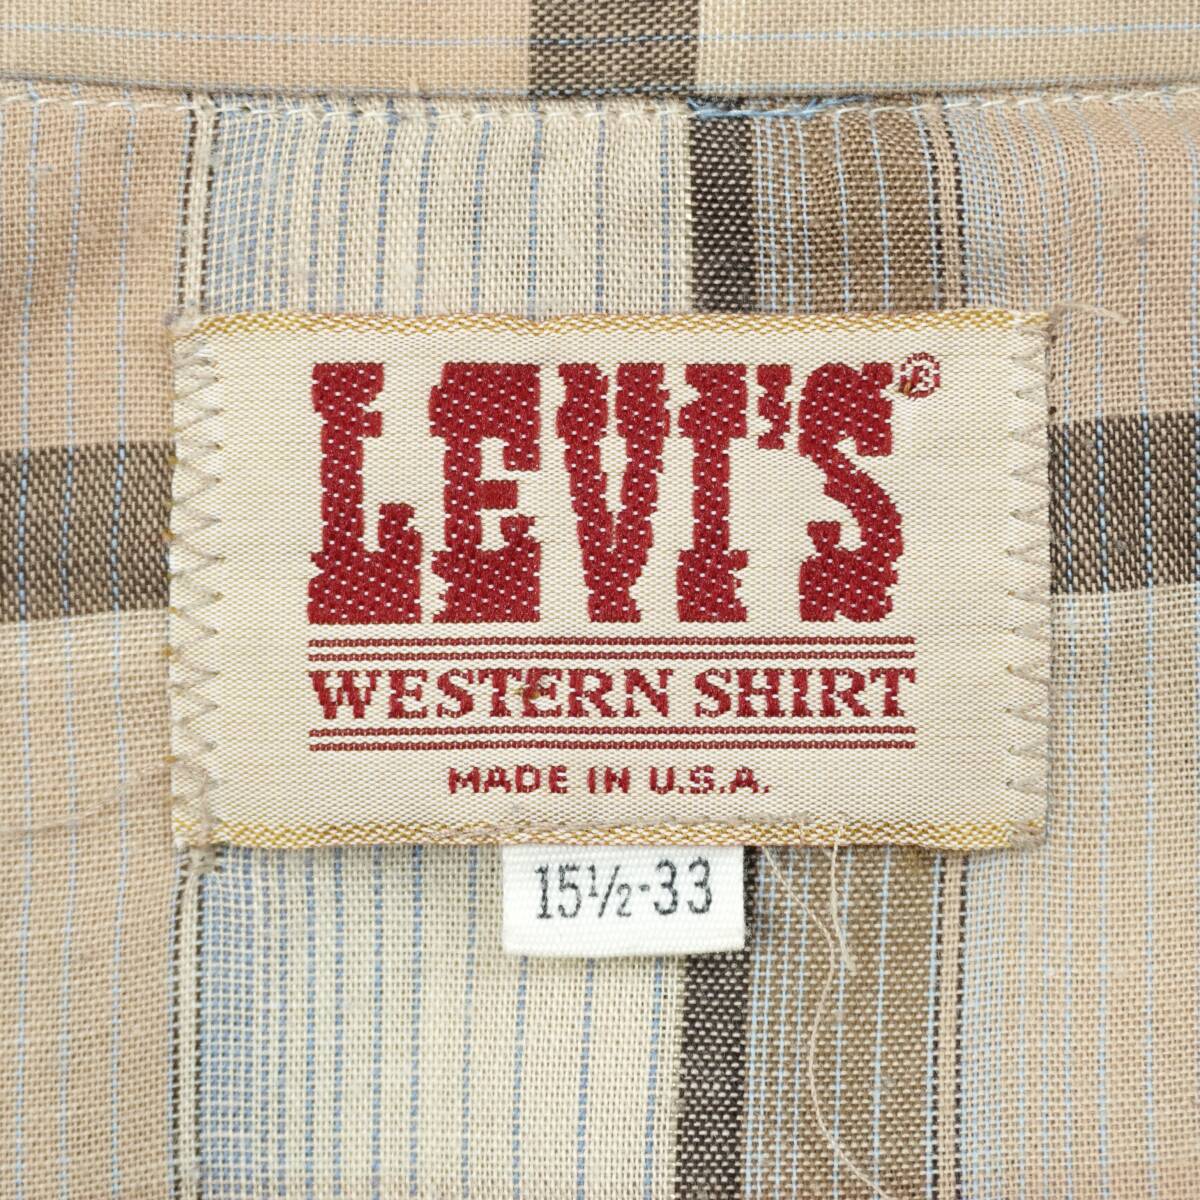 Levi's Western Shirts 1980s 15 1/2-33 SH2224 Vintage リーバイス ウエスタンシャツ シャツ 1980年代 アメリカ製 ヴィンテージ